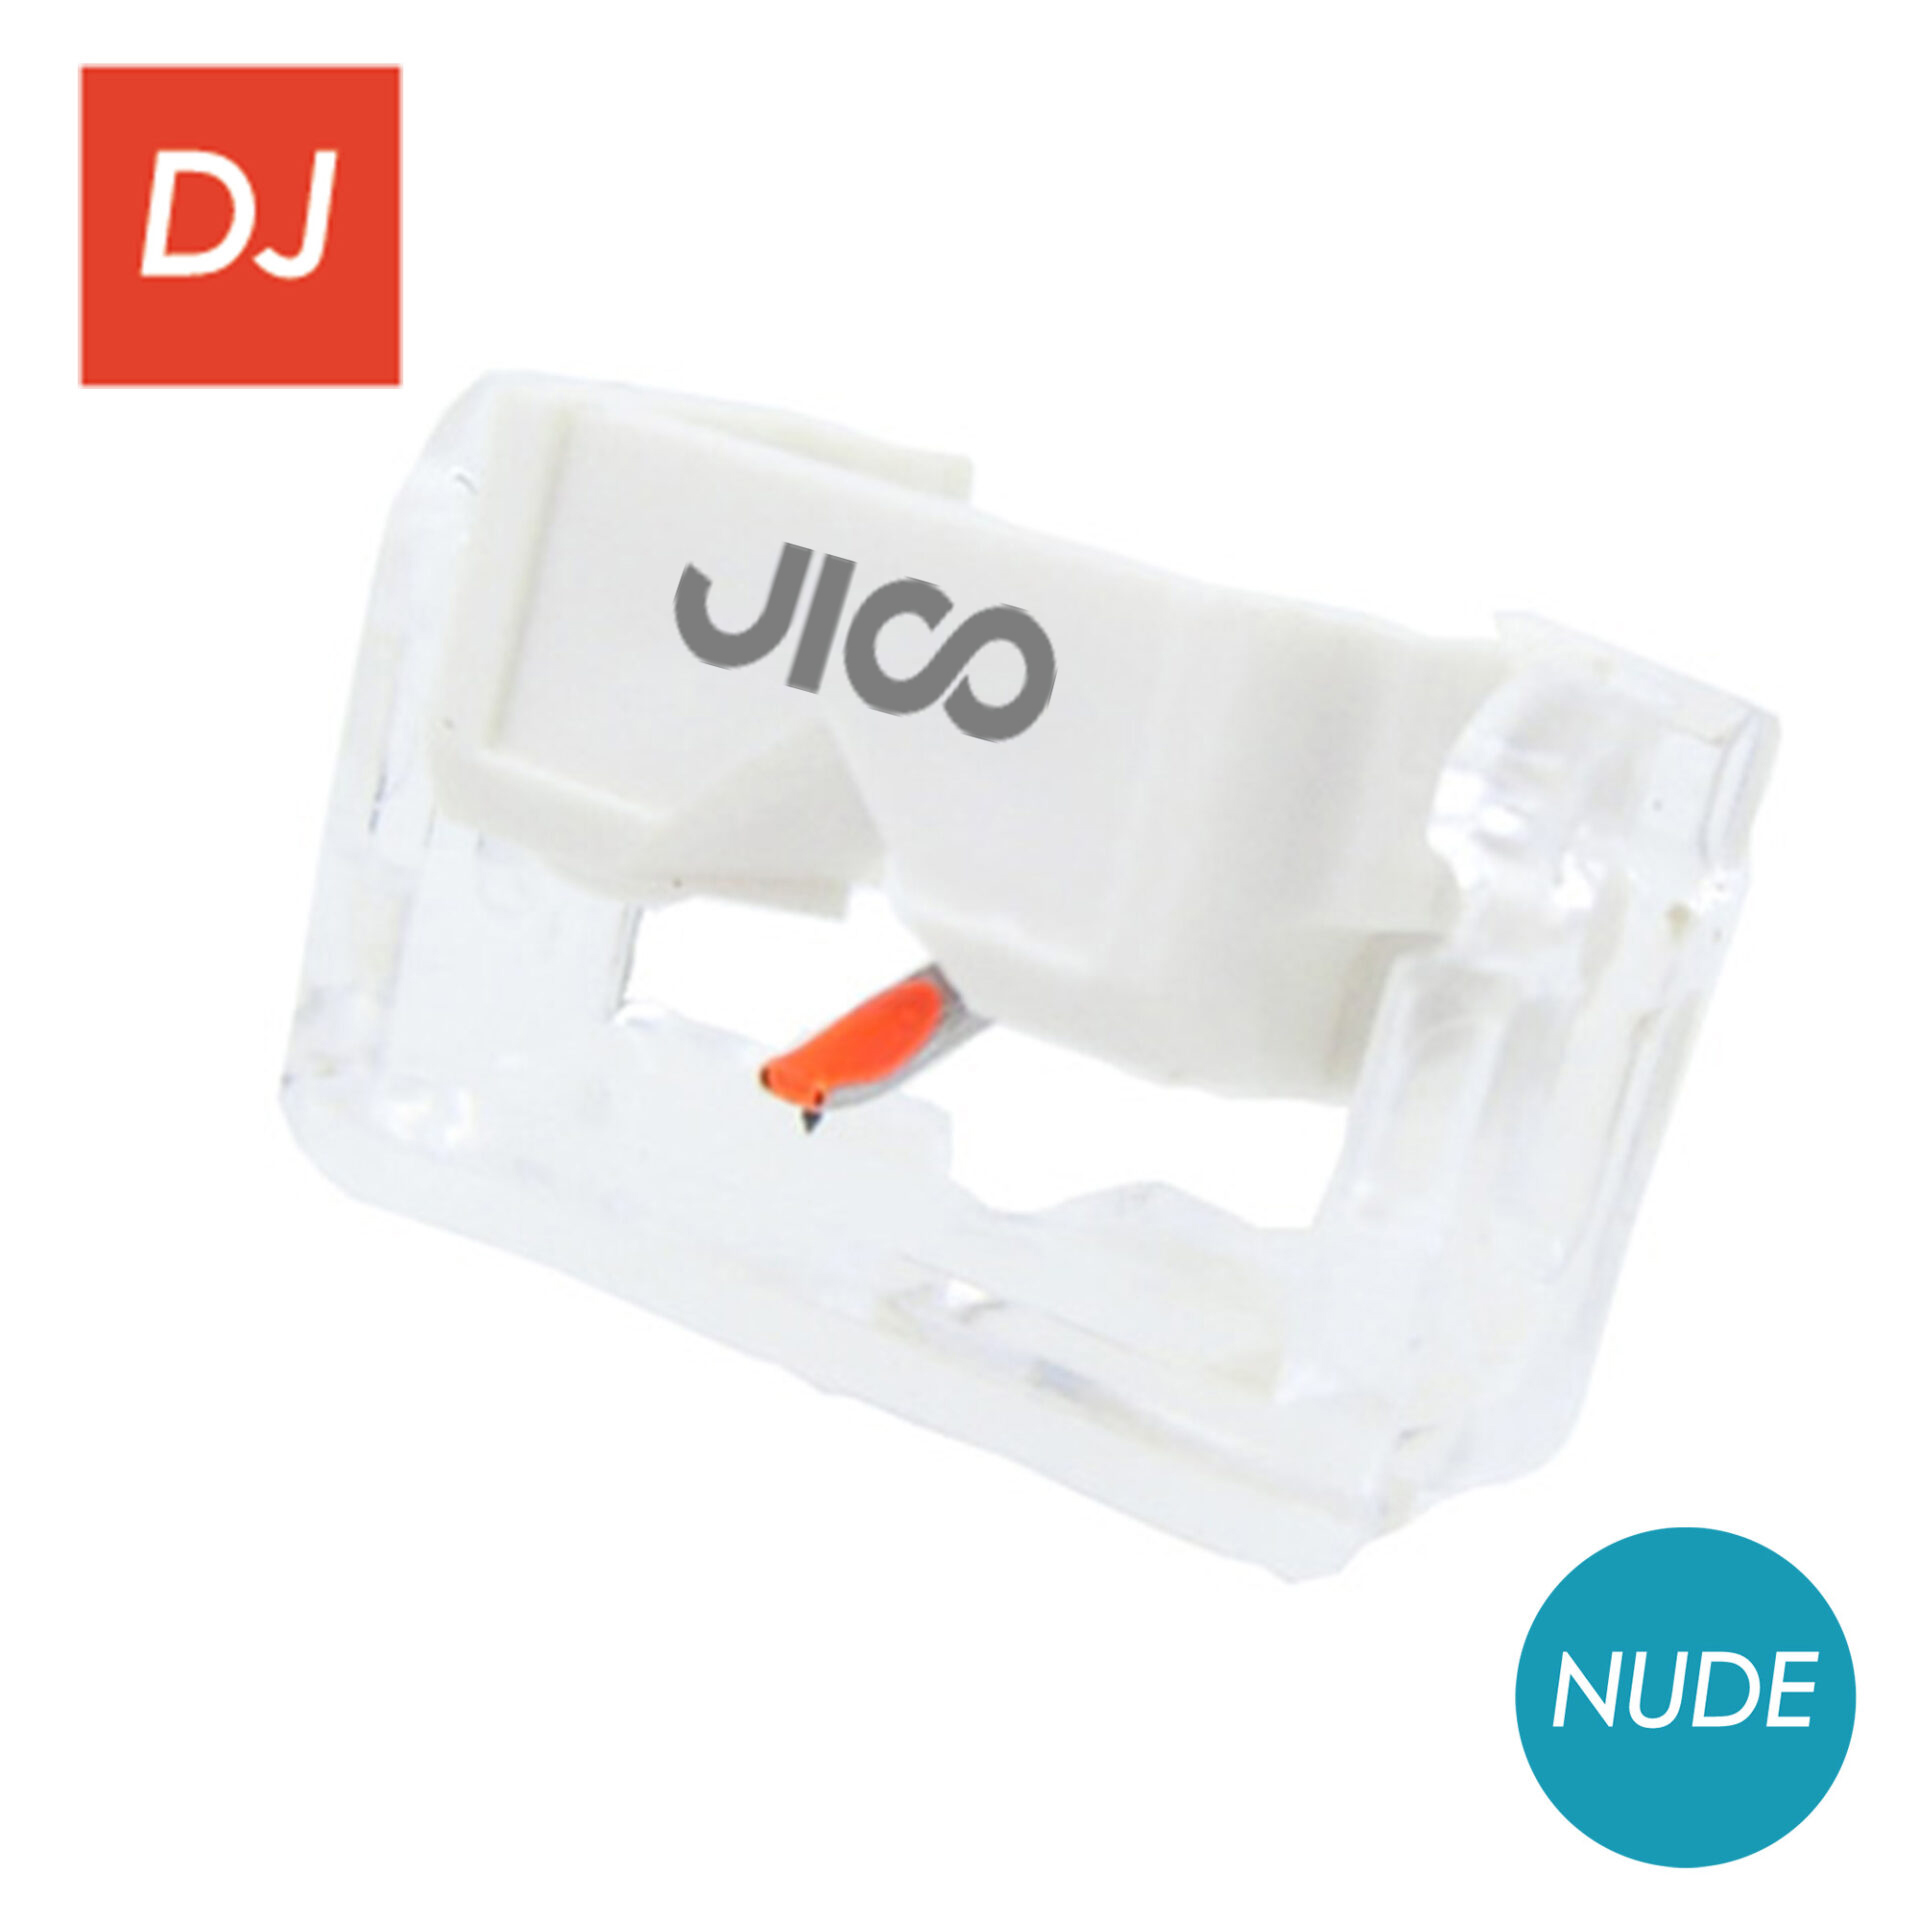 N44-7 NUDE Shure 交換針 DJ仕様モデル 針カバー付 | JICO 日本精機